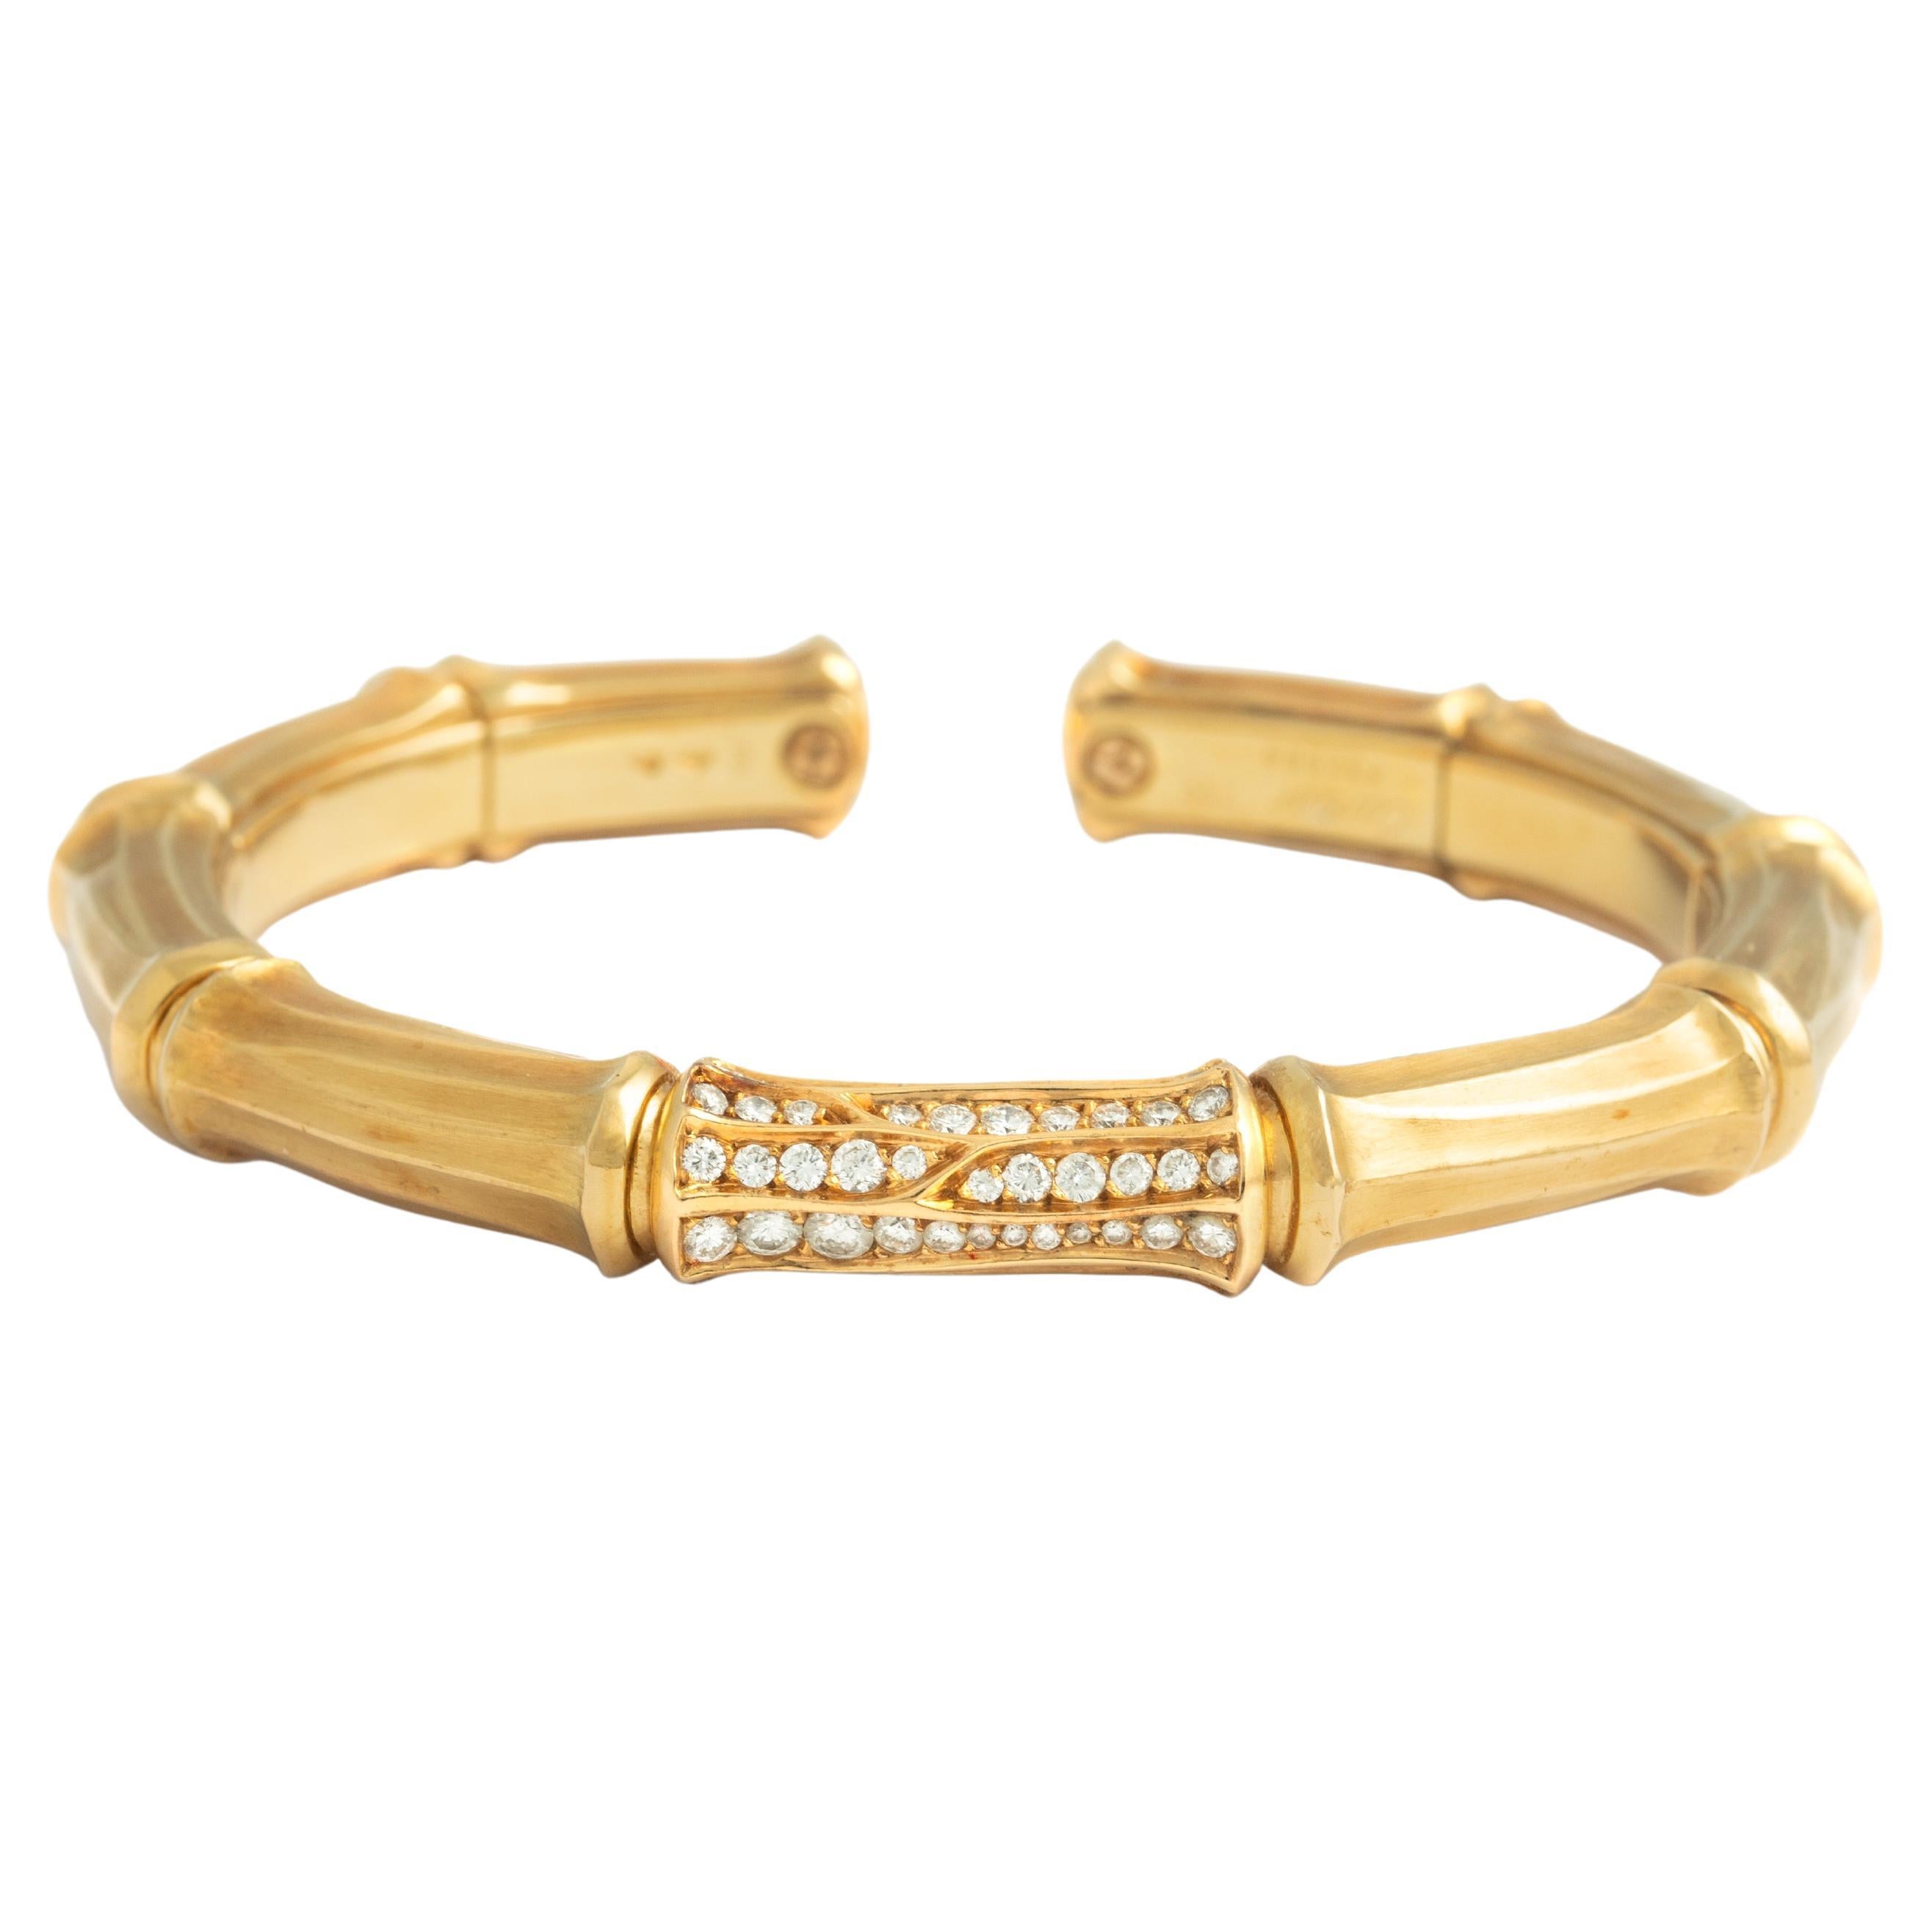 Cartier vintage elegant 18K gold and diamond bangle bracelet in the desirable 